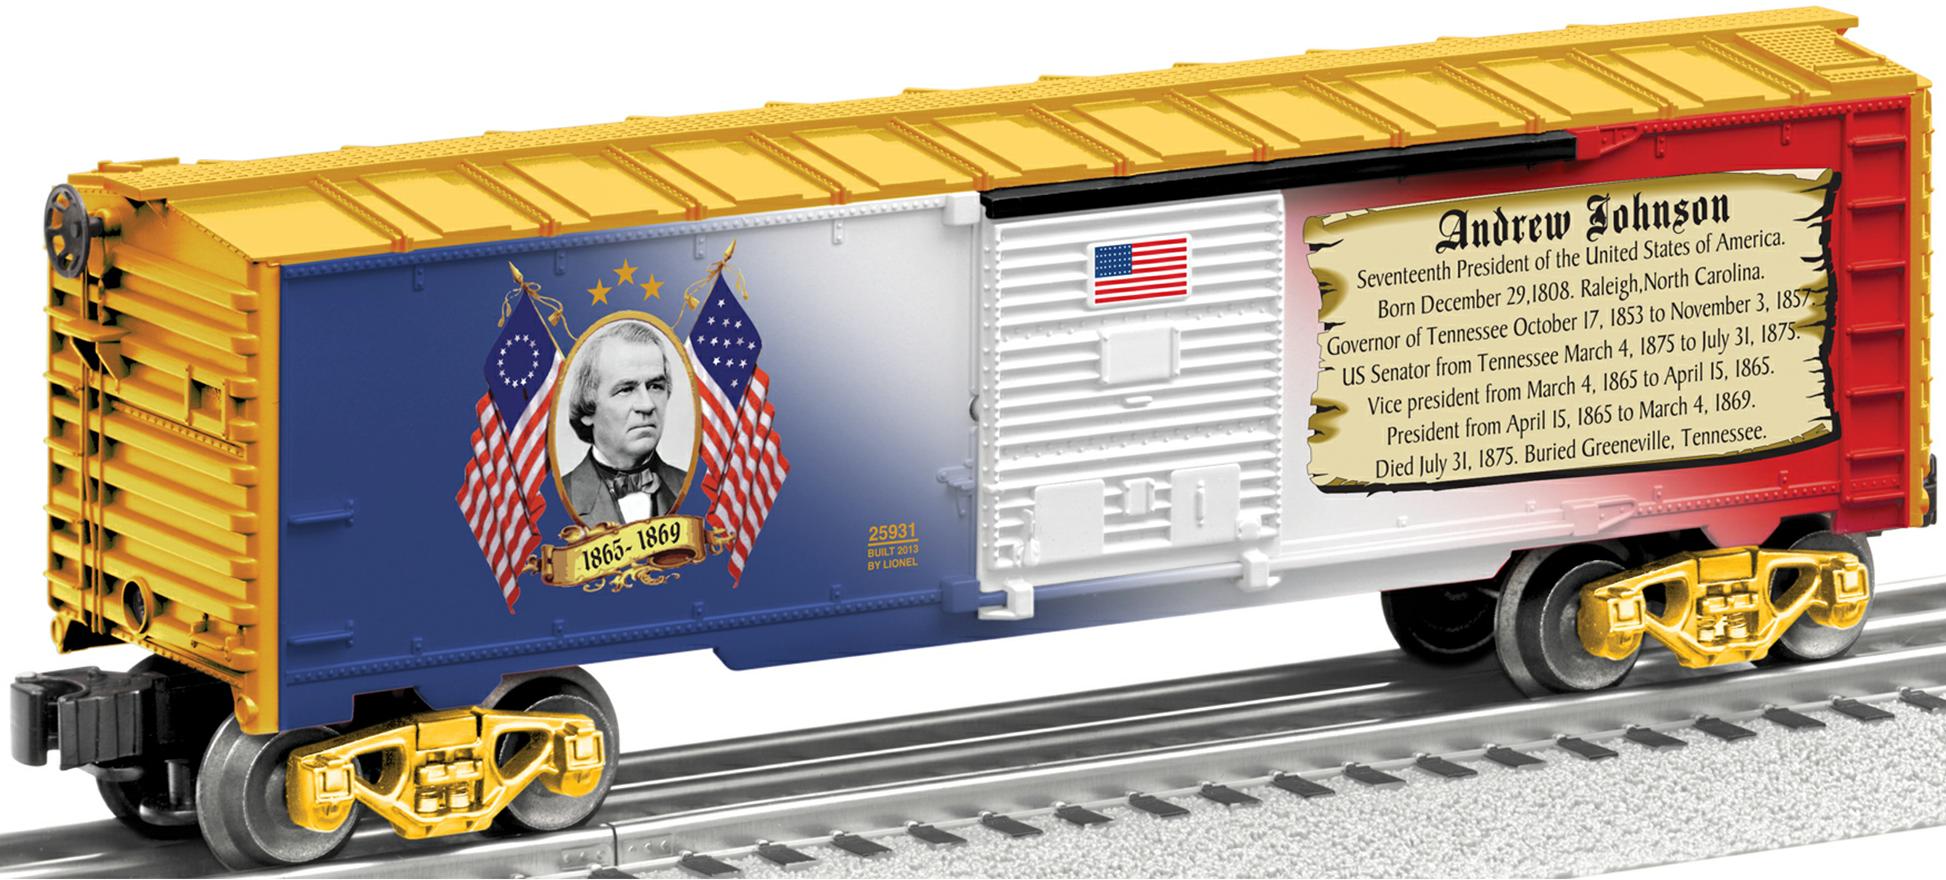 Andrew Johnson boxcar image